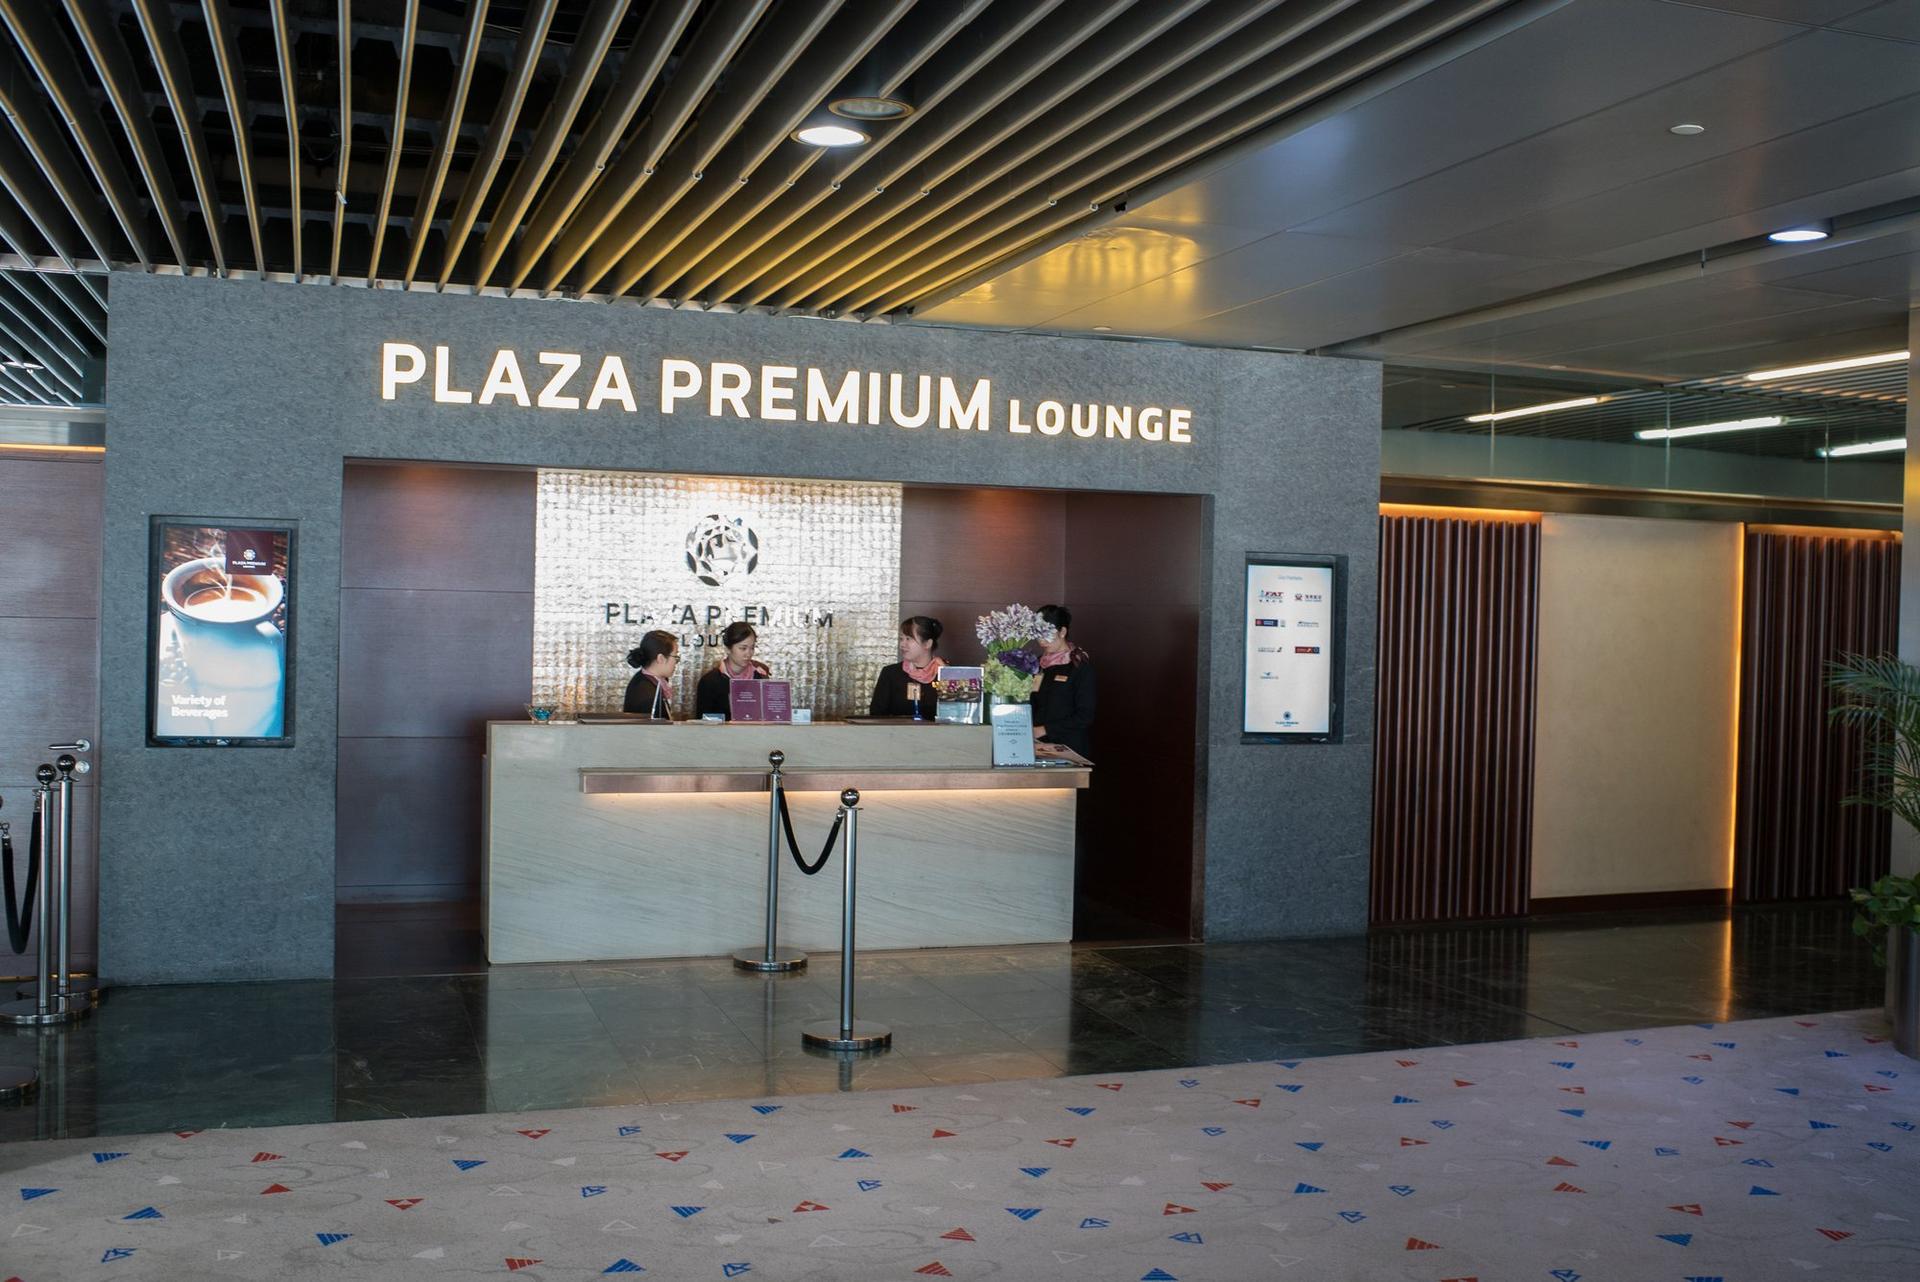 Plaza Premium Lounge image 5 of 37